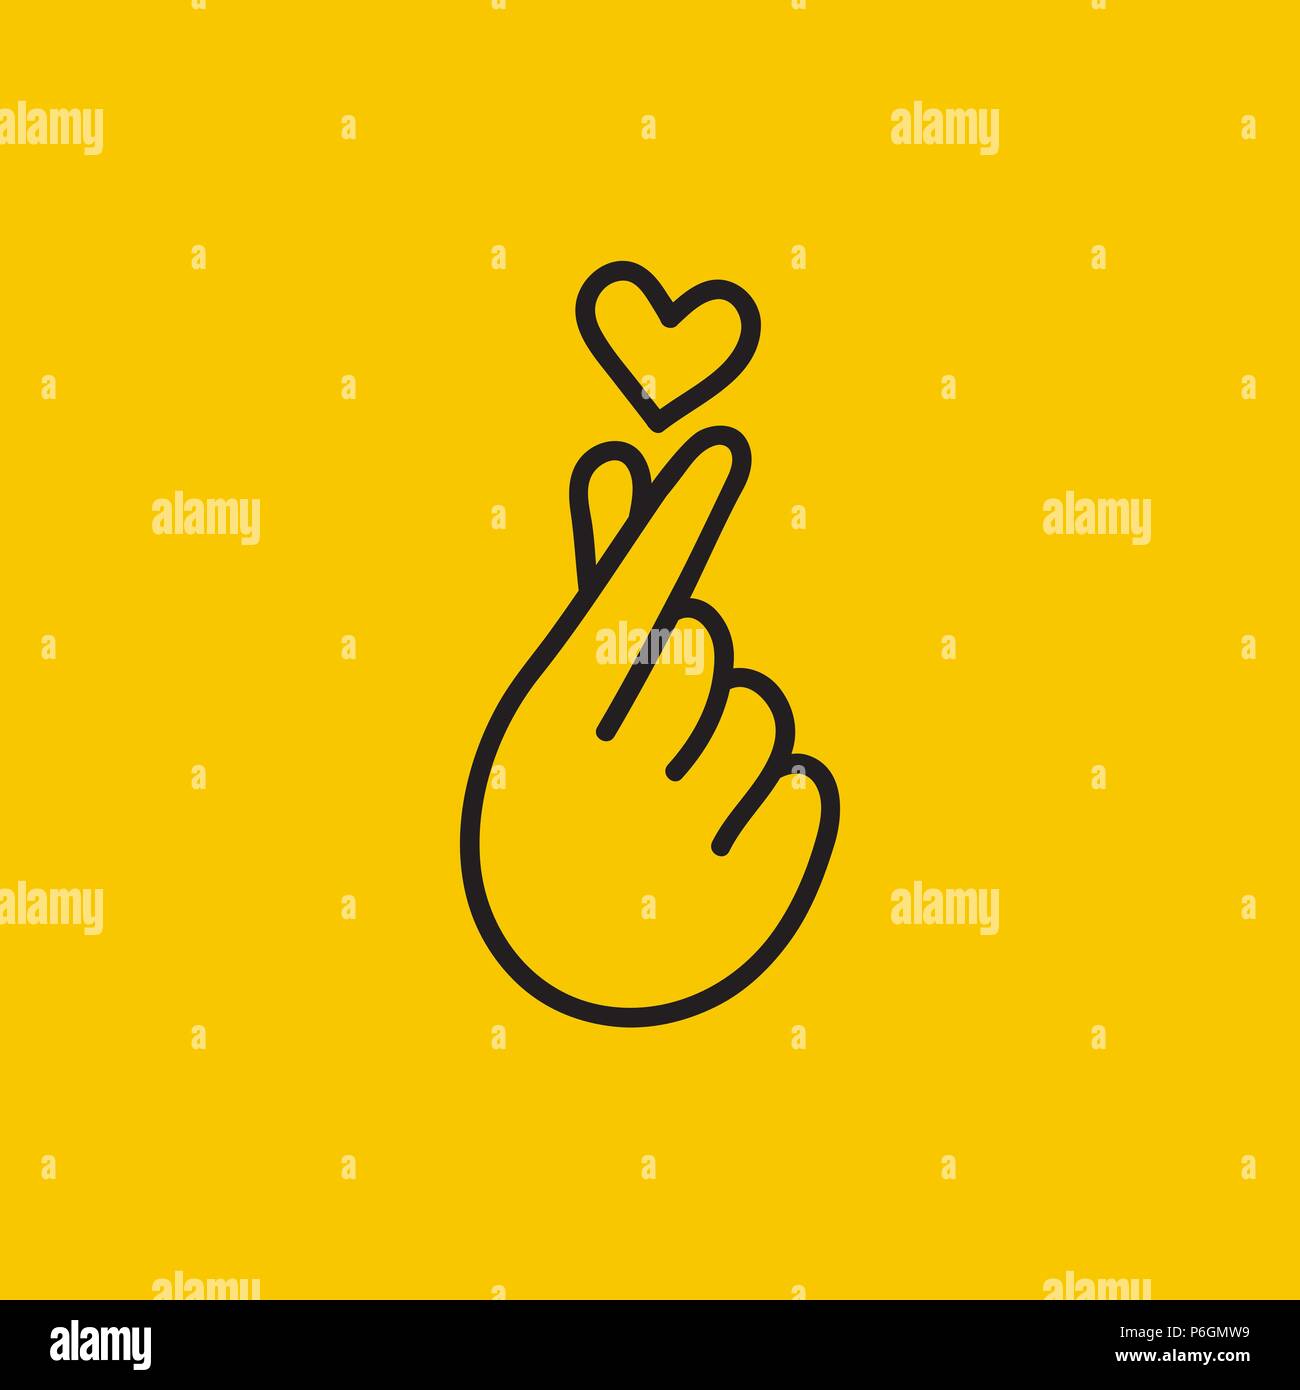 Download Korean heart, love symbol, fingers making small heart ...